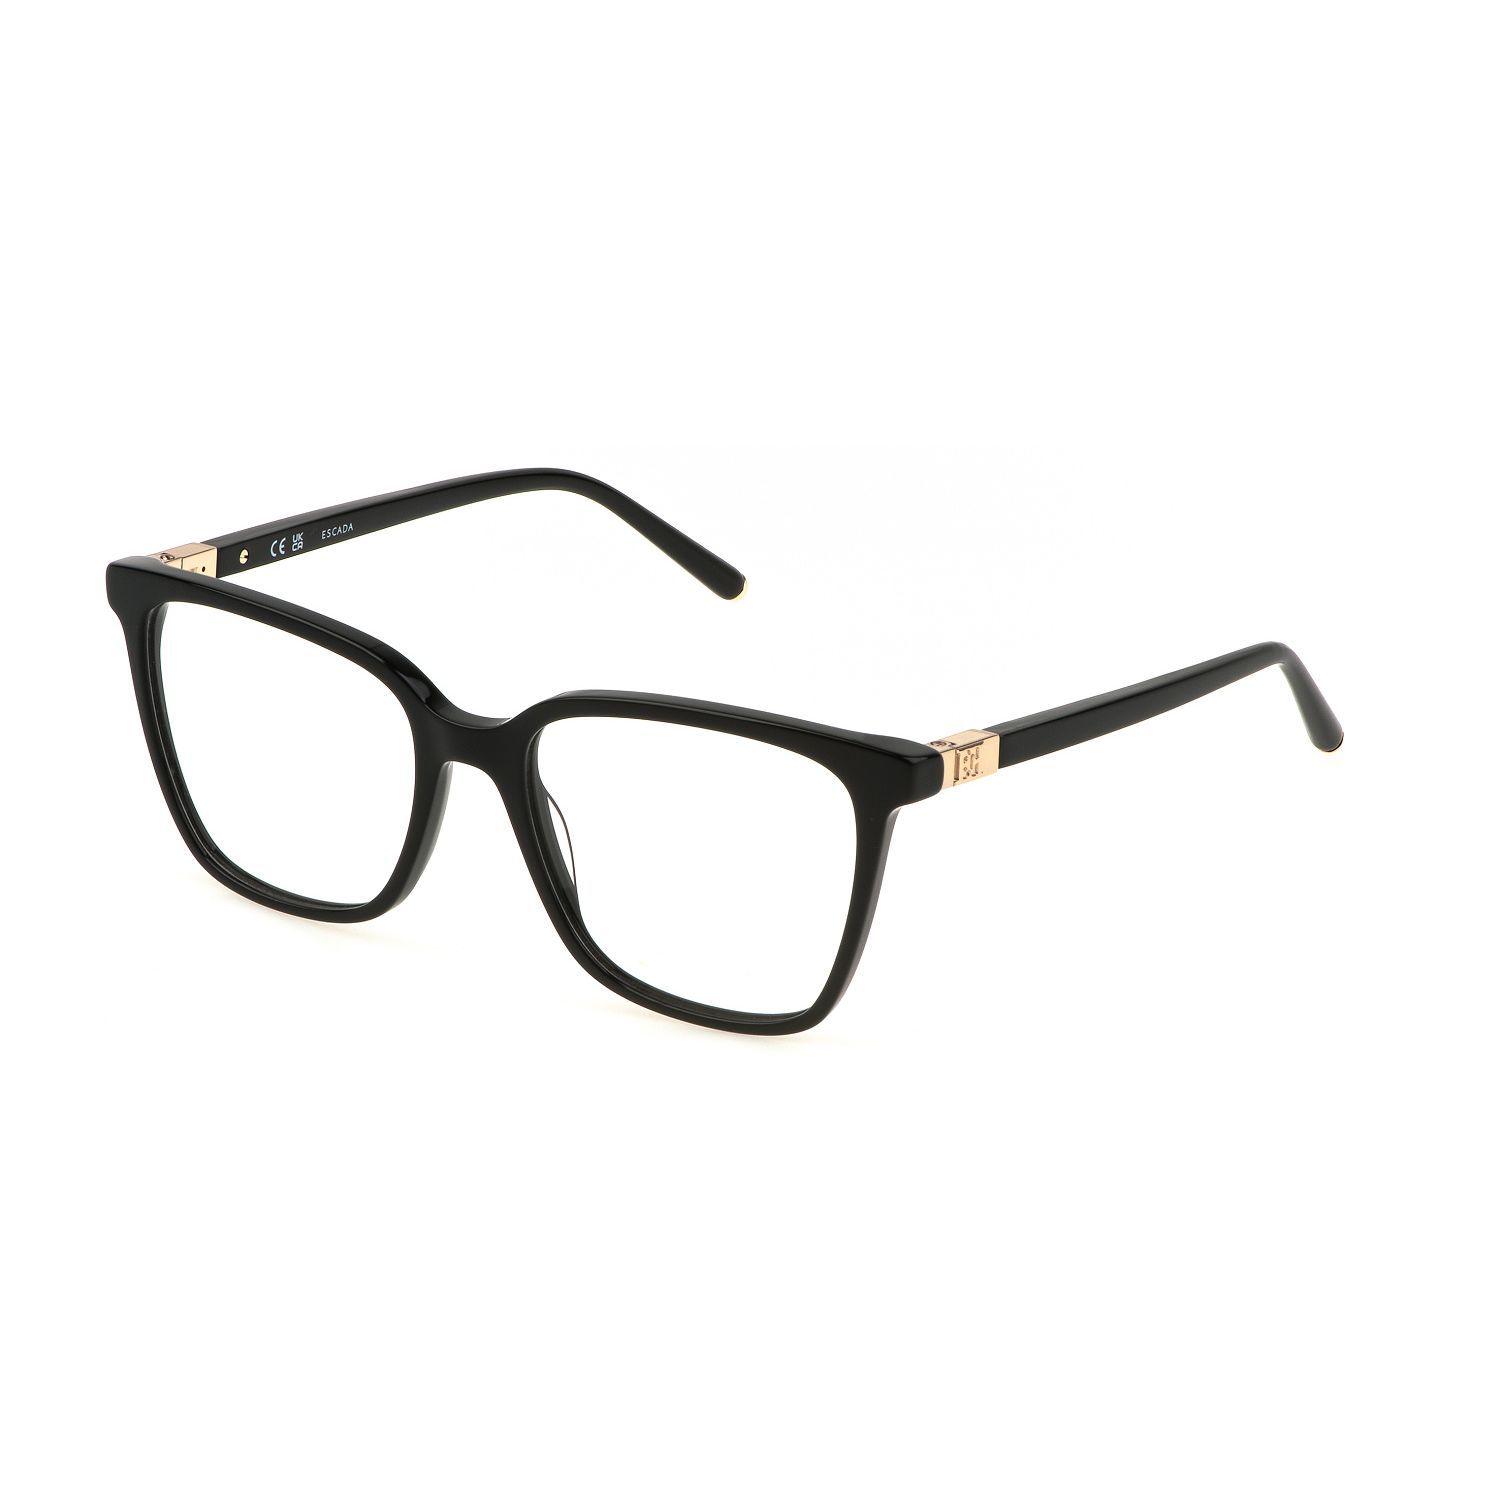 VESE04 Square Eyeglasses 0700 - size 53